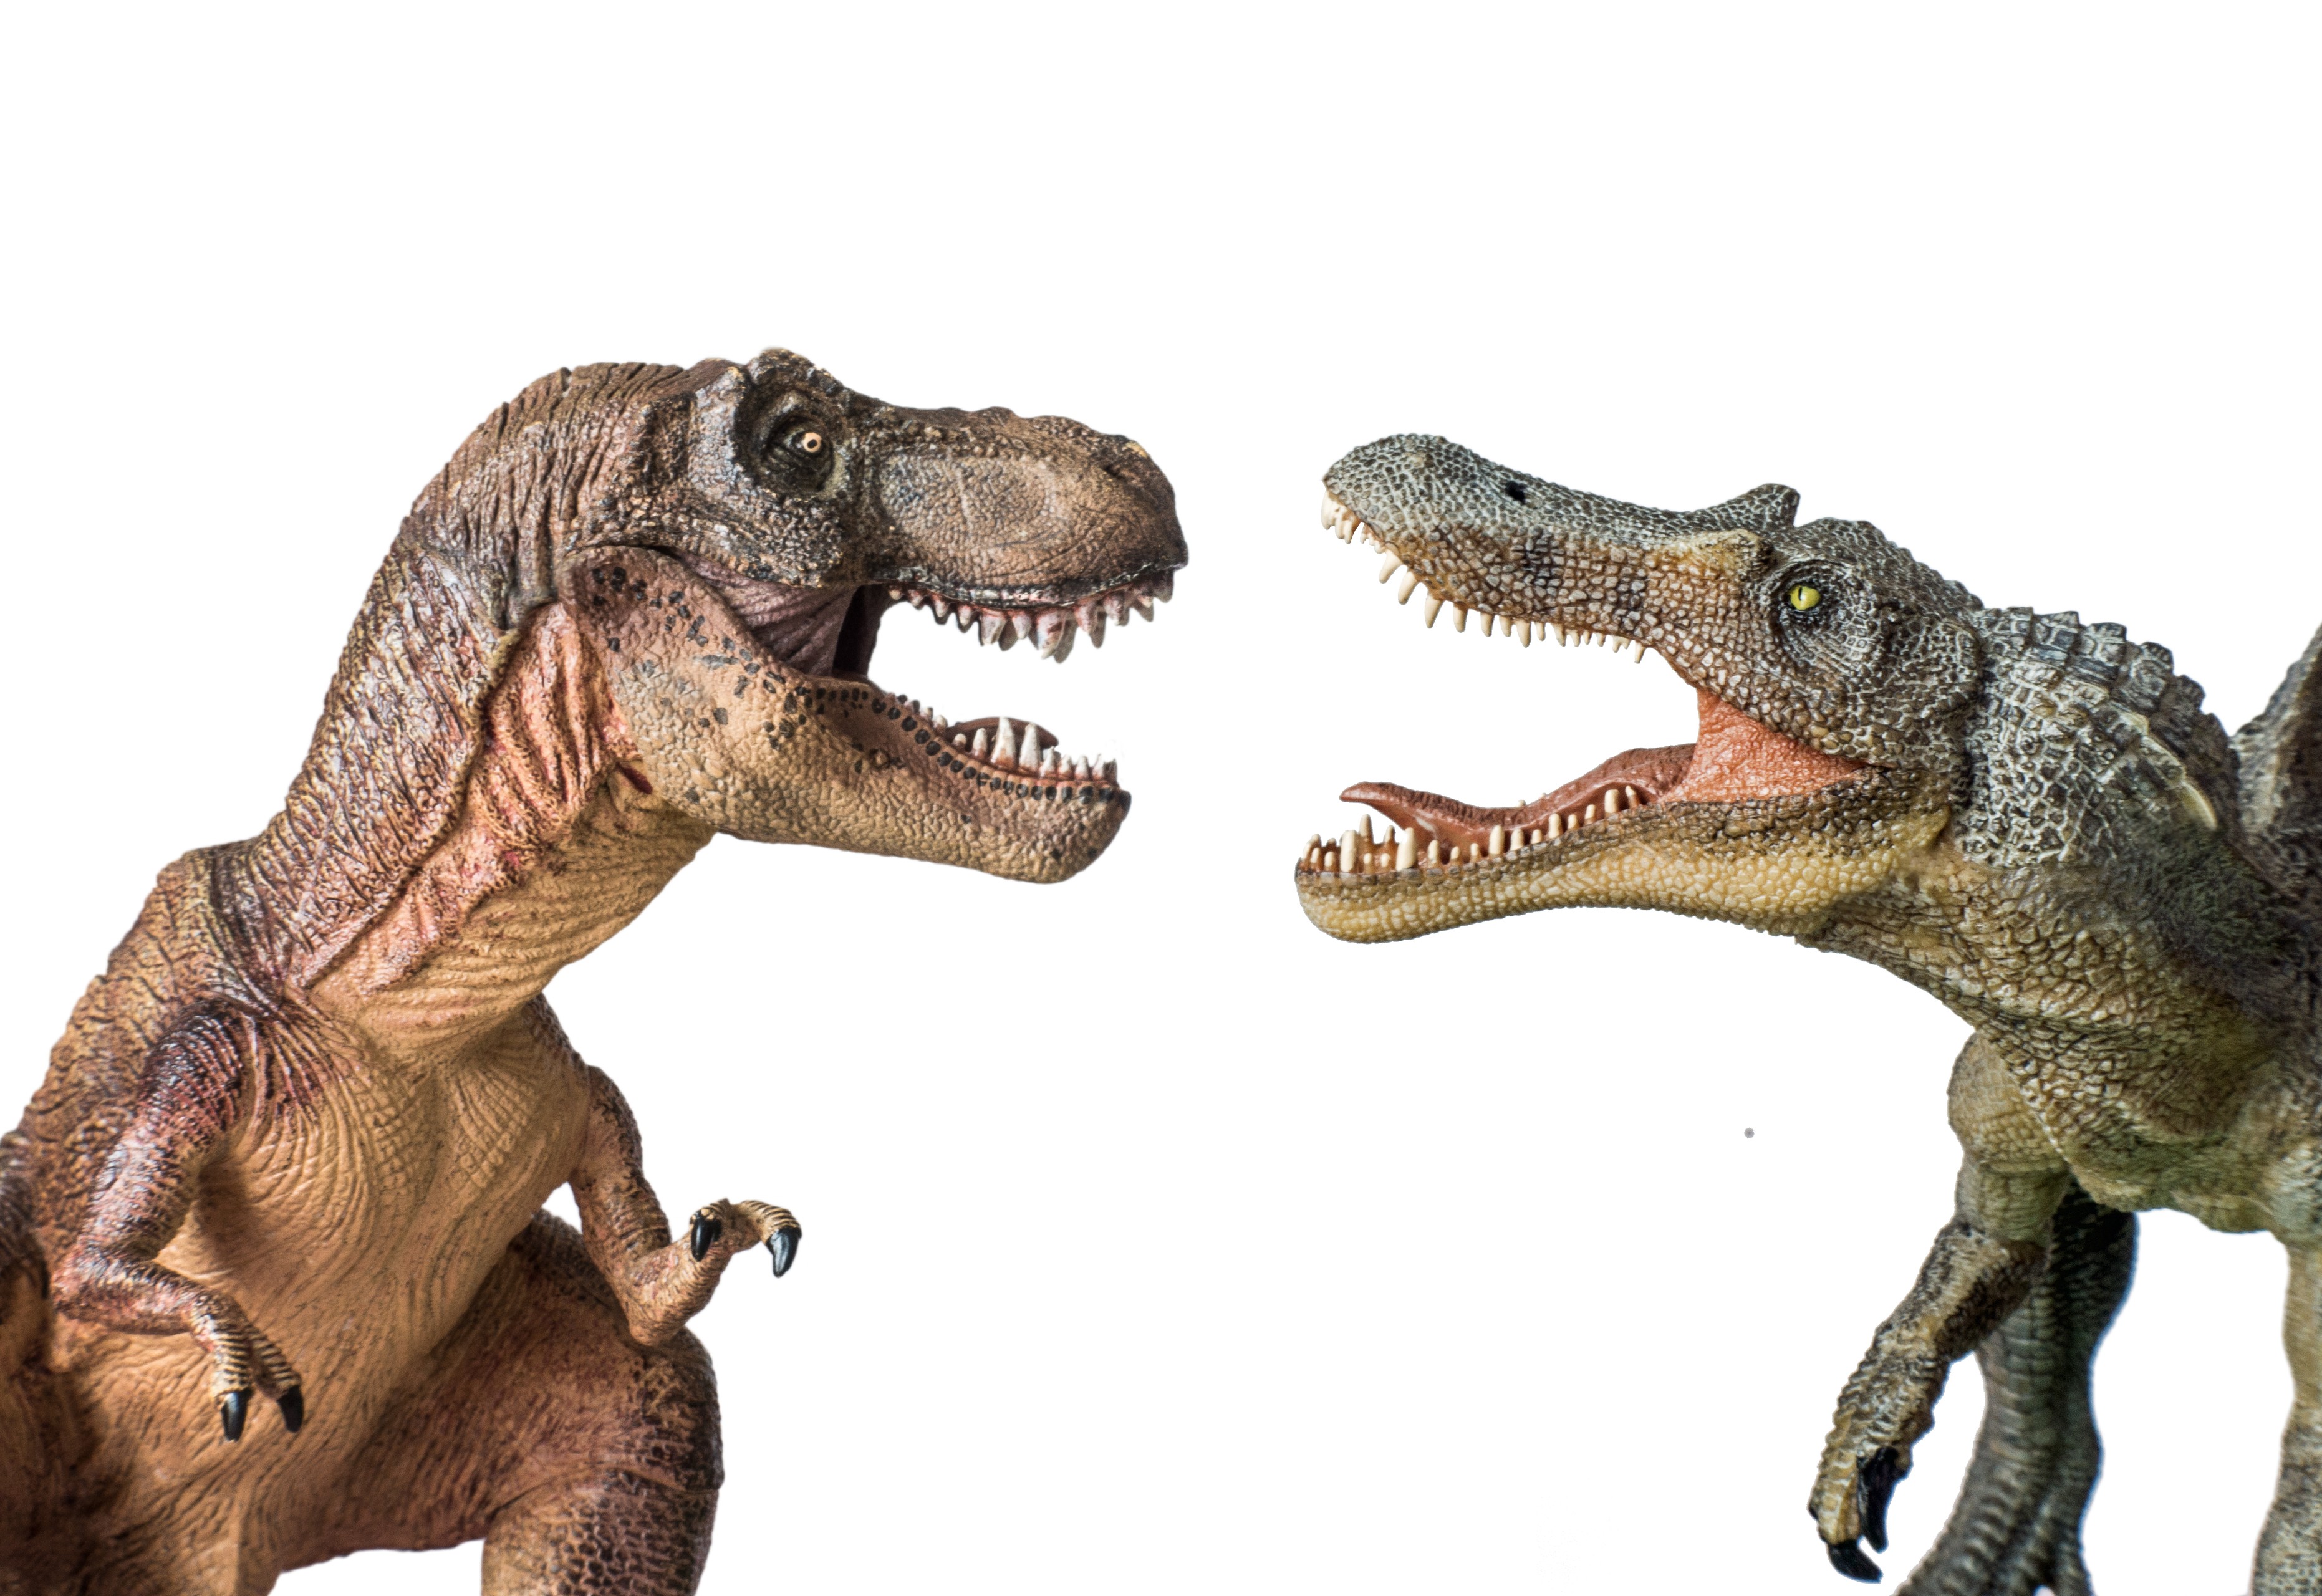 Was Spinosaurus Bigger Than T-Rex? 